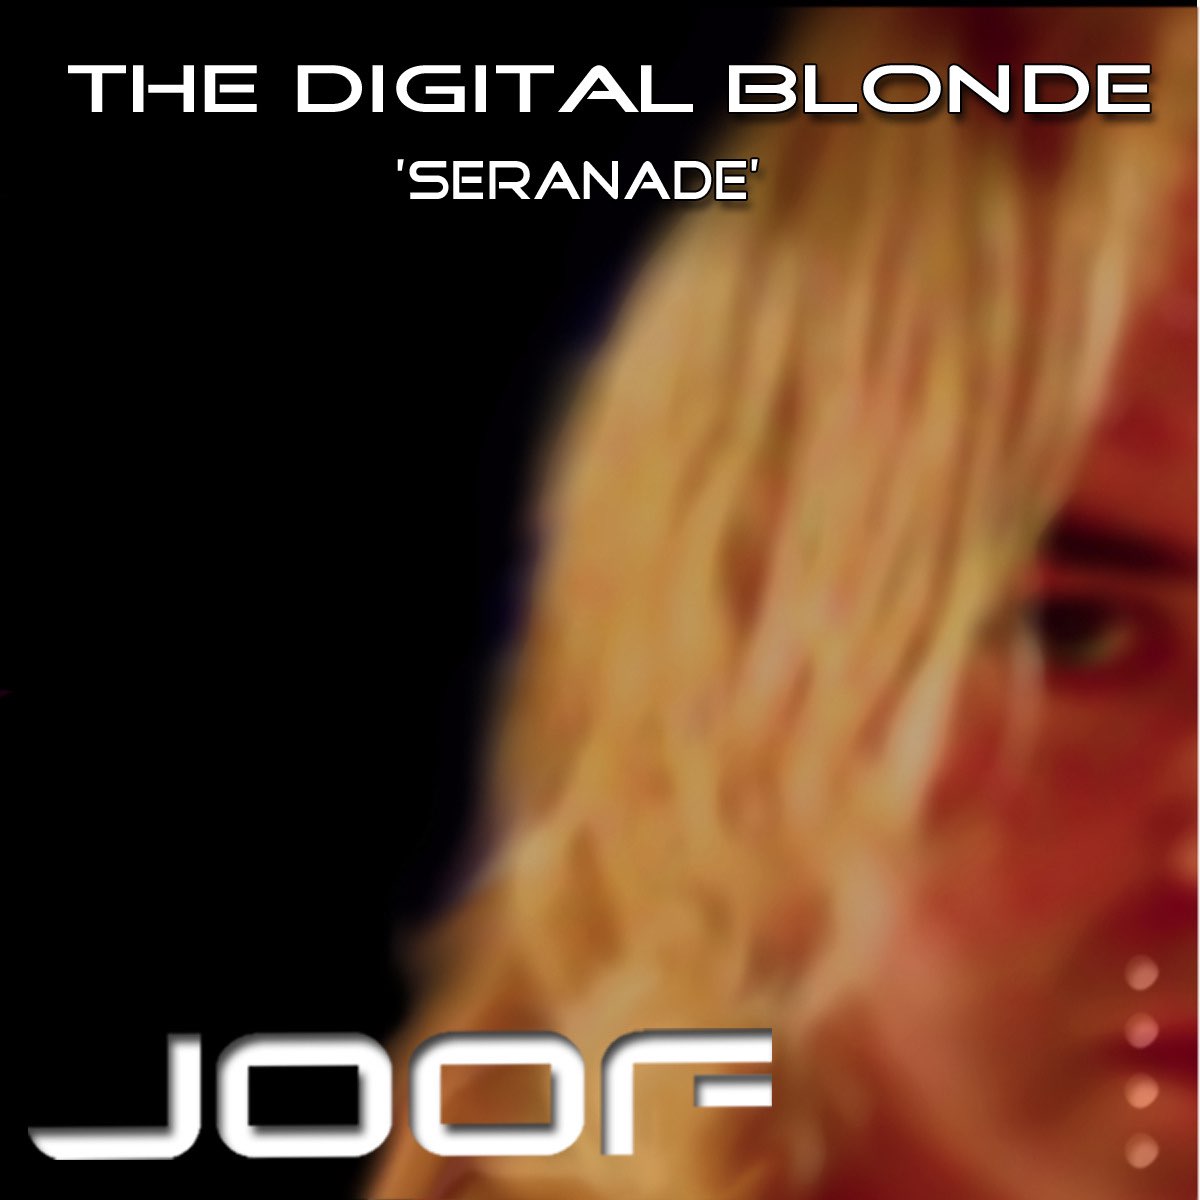 Blonde альбом. The Digital blonde. The Digital blonde биография. Blondie альбомы.